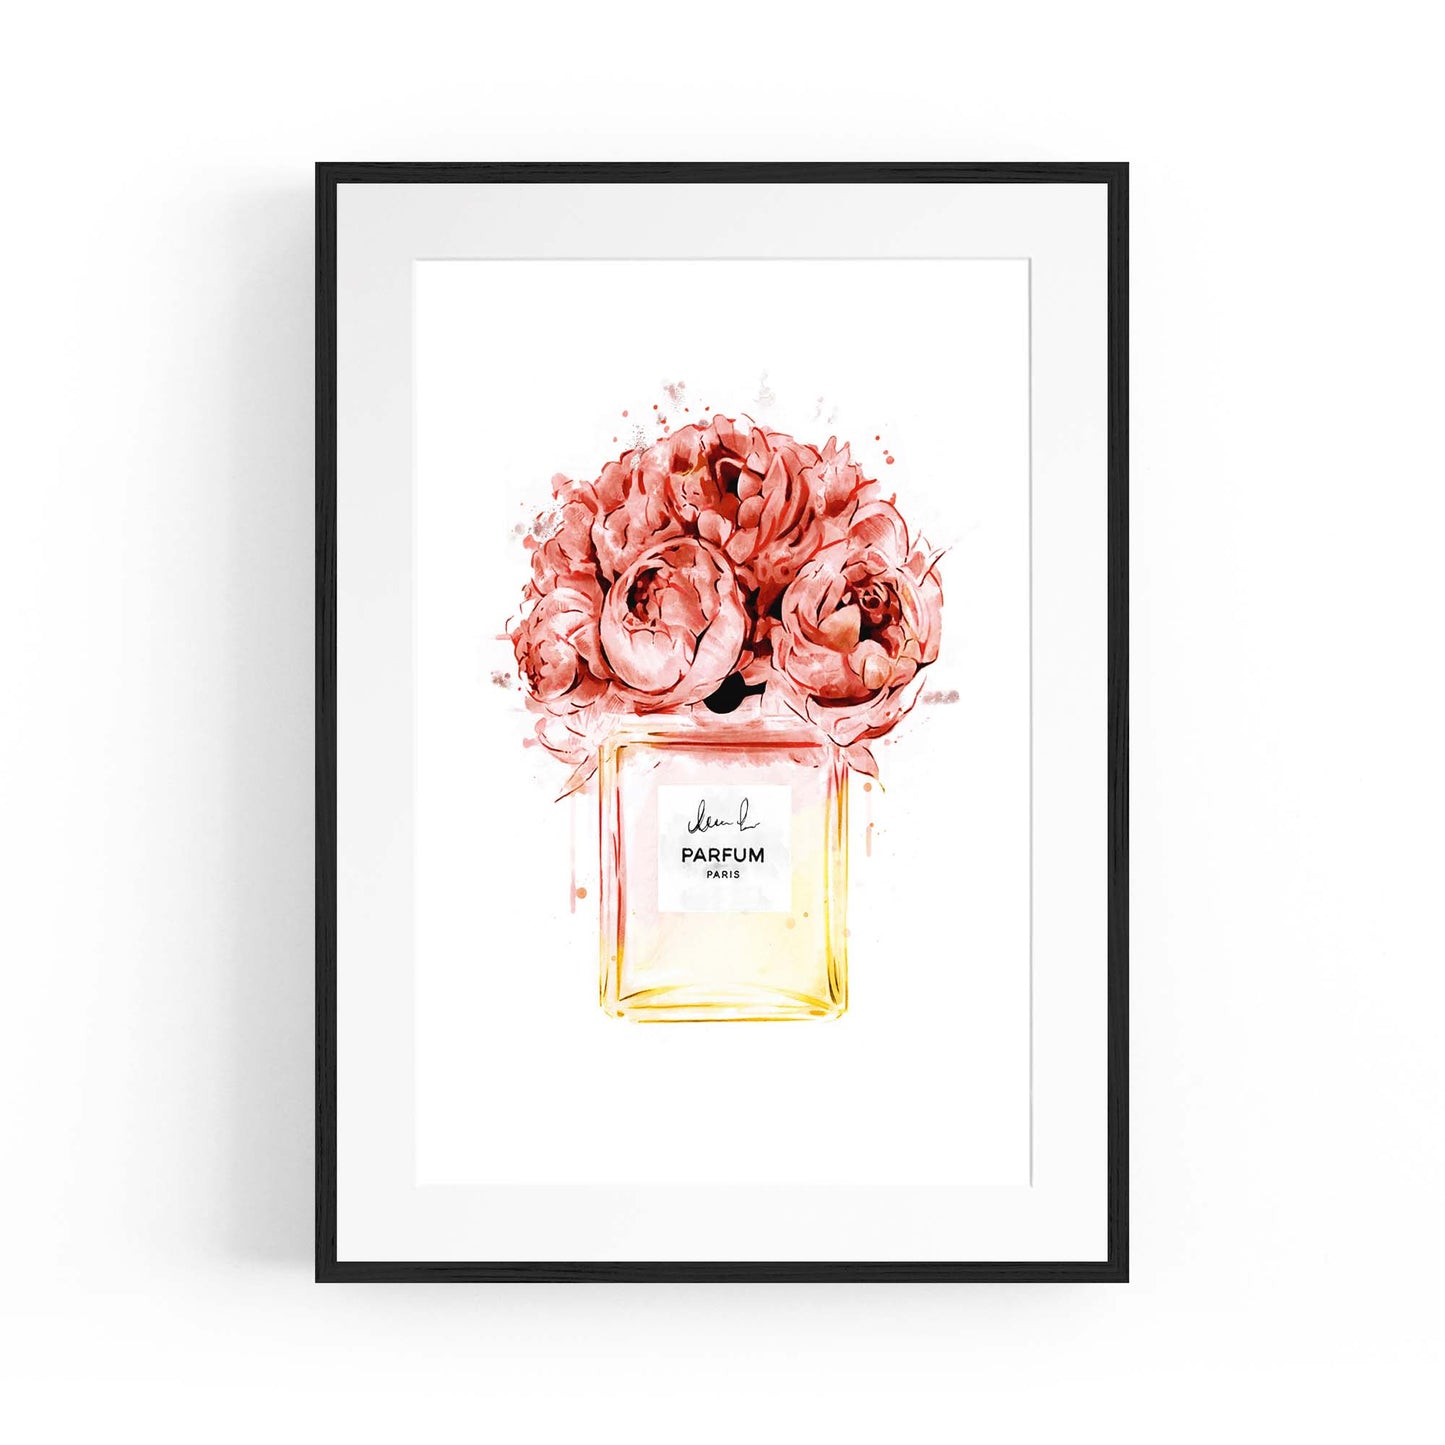 Peach Floral Perfume Bottle Fashion Wall Art #2 - The Affordable Art Company